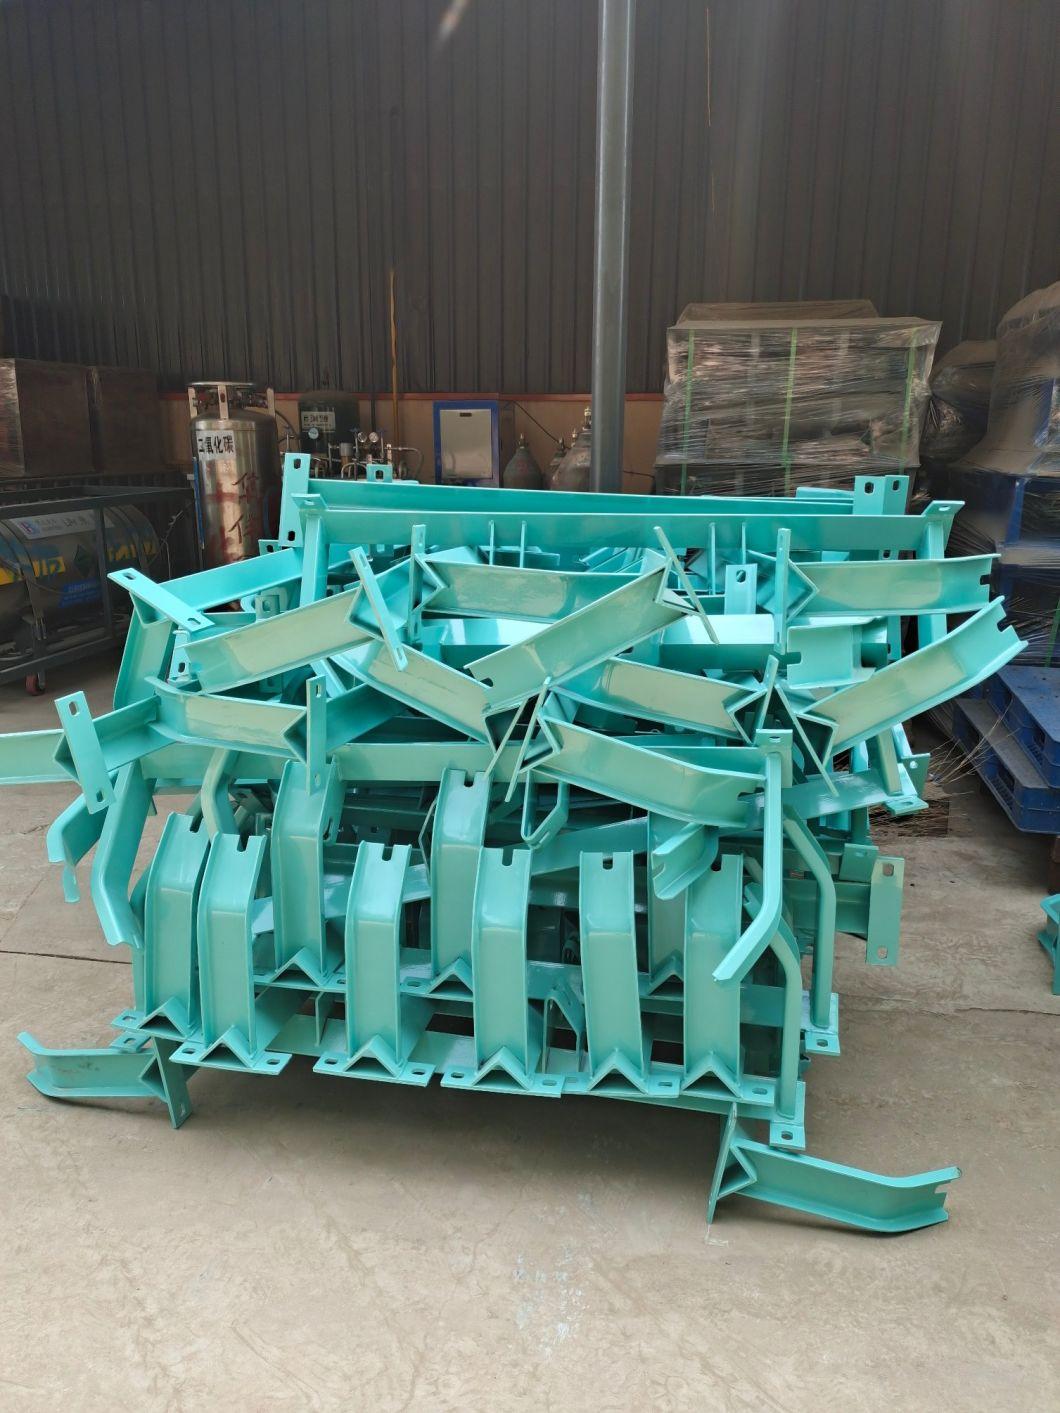 Suppliers Price Conveyor Roller Bracket Idler Frame Support Stand for Sale